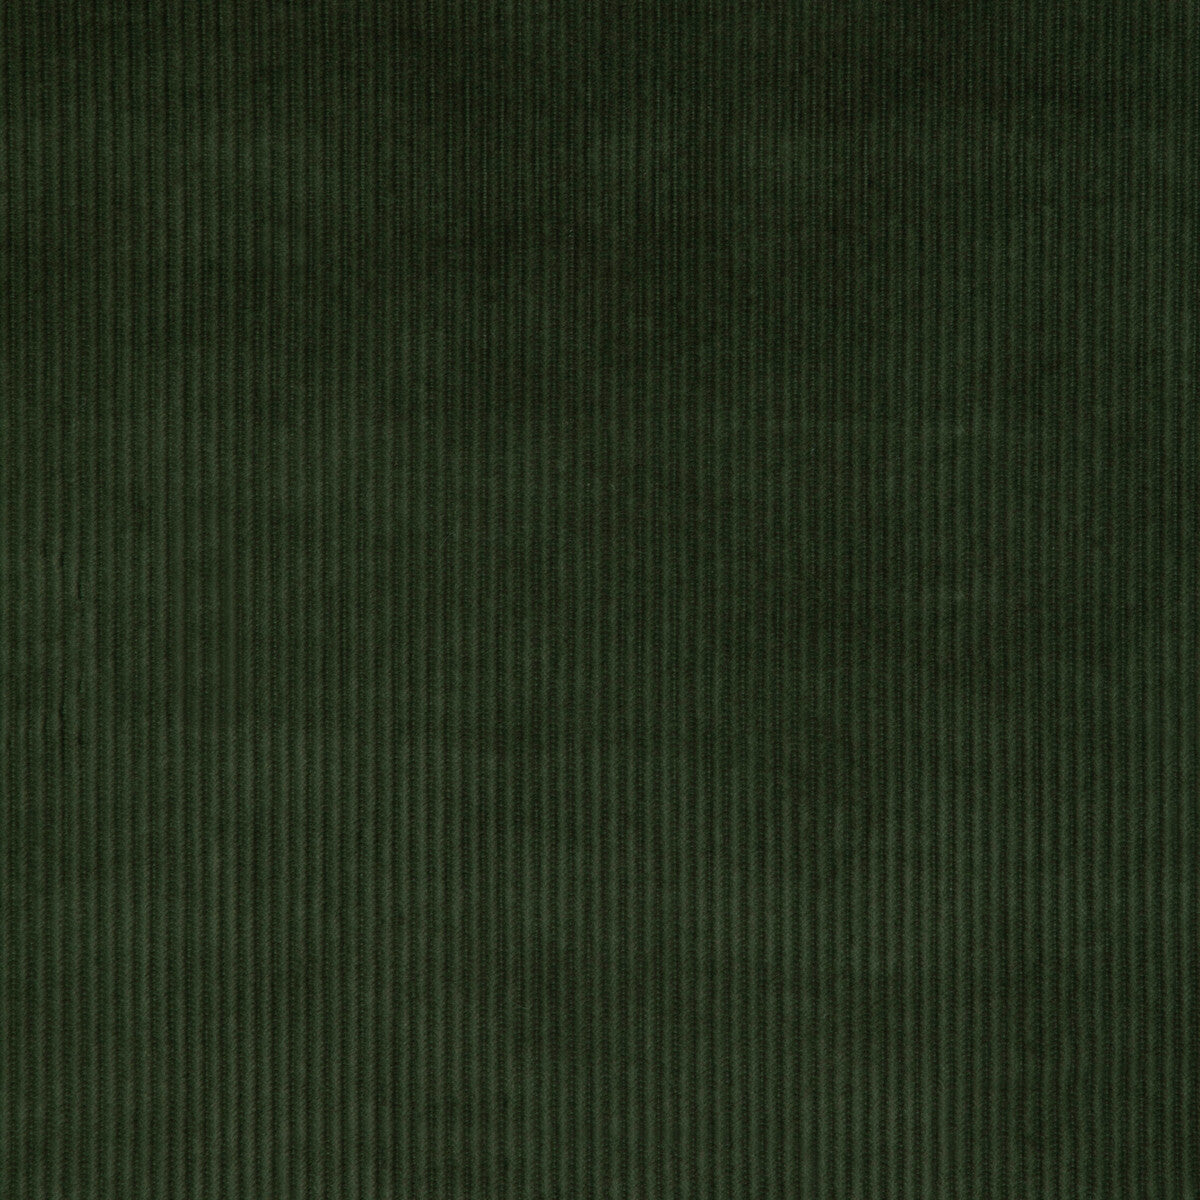 Kravet Smart fabric in 37006-3333 color - pattern 37006.3333.0 - by Kravet Smart